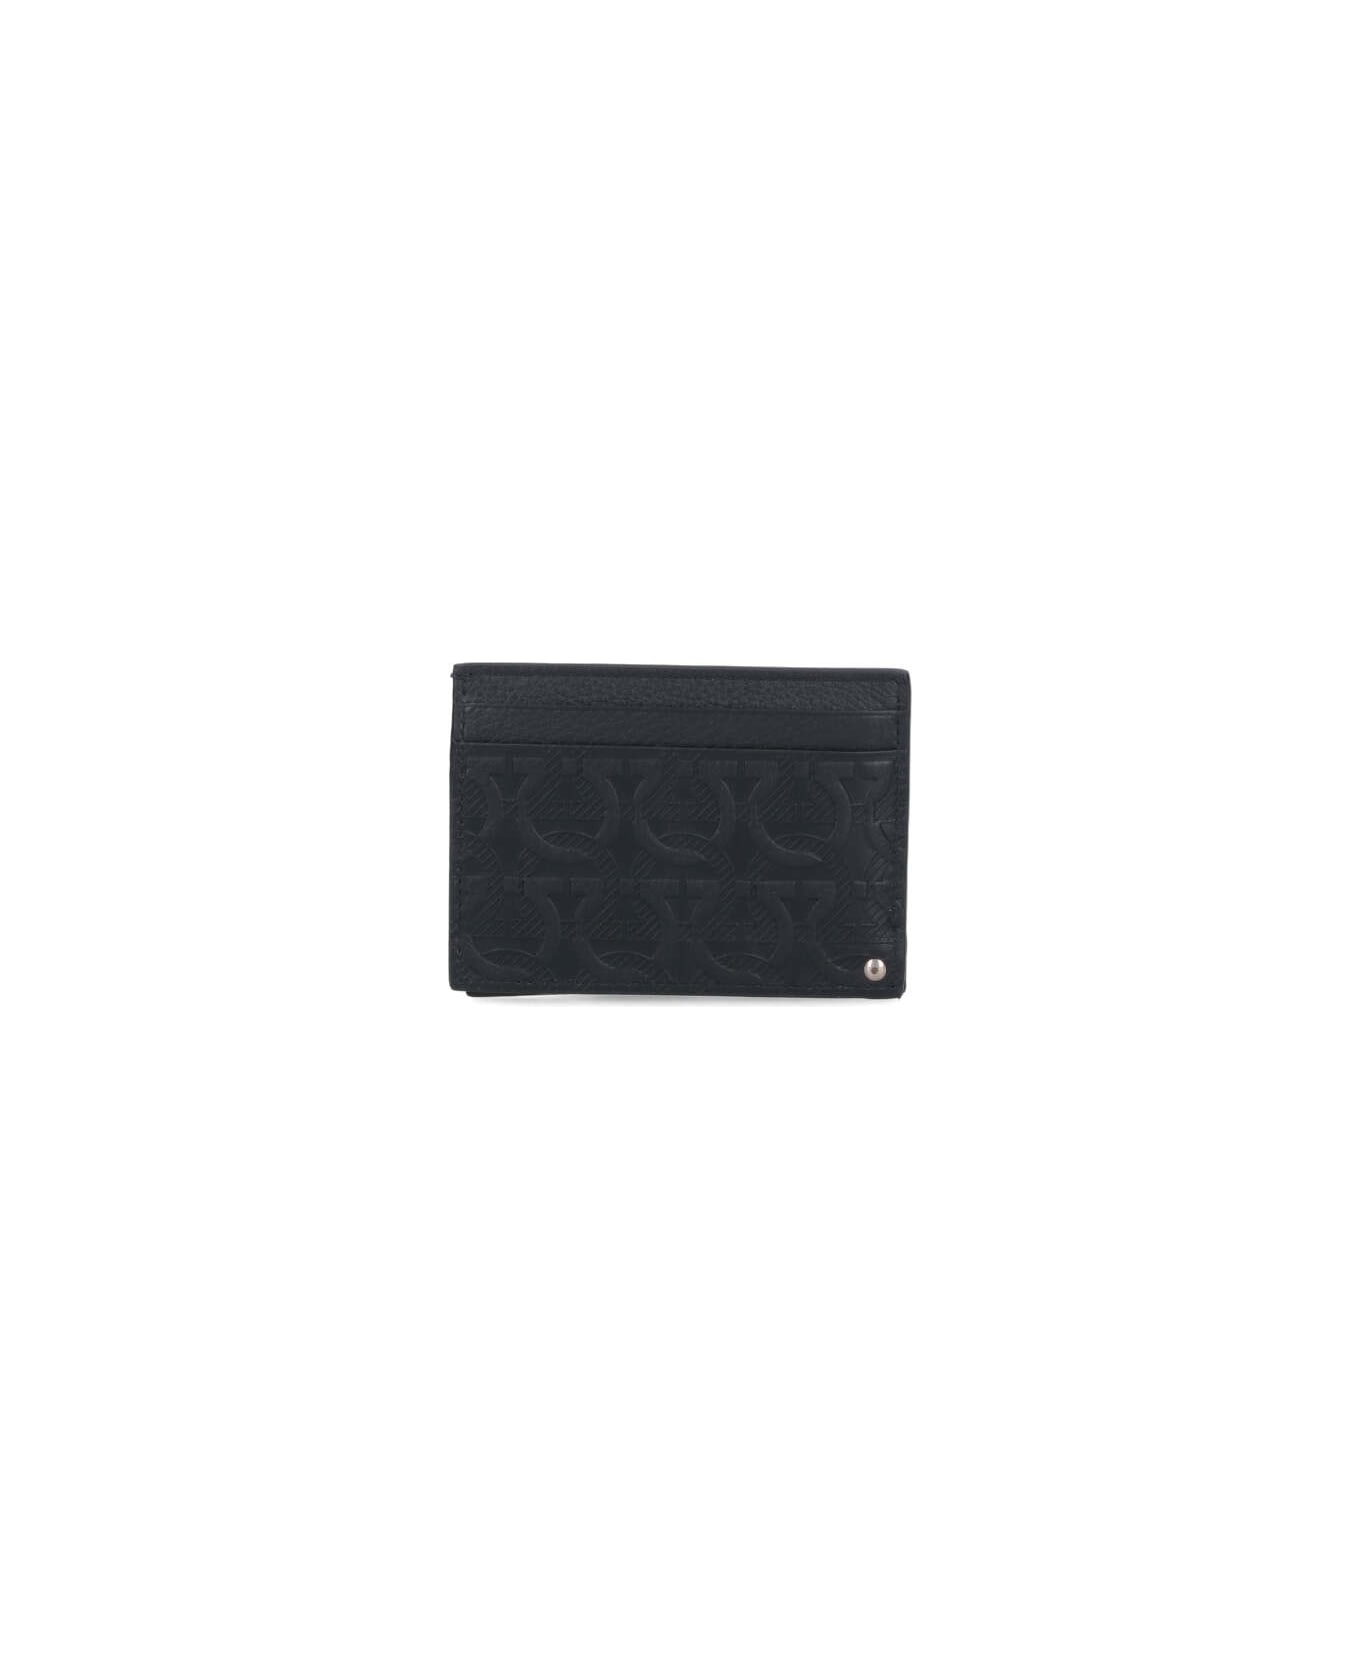 Ferragamo Logo Card Holder - Black   財布